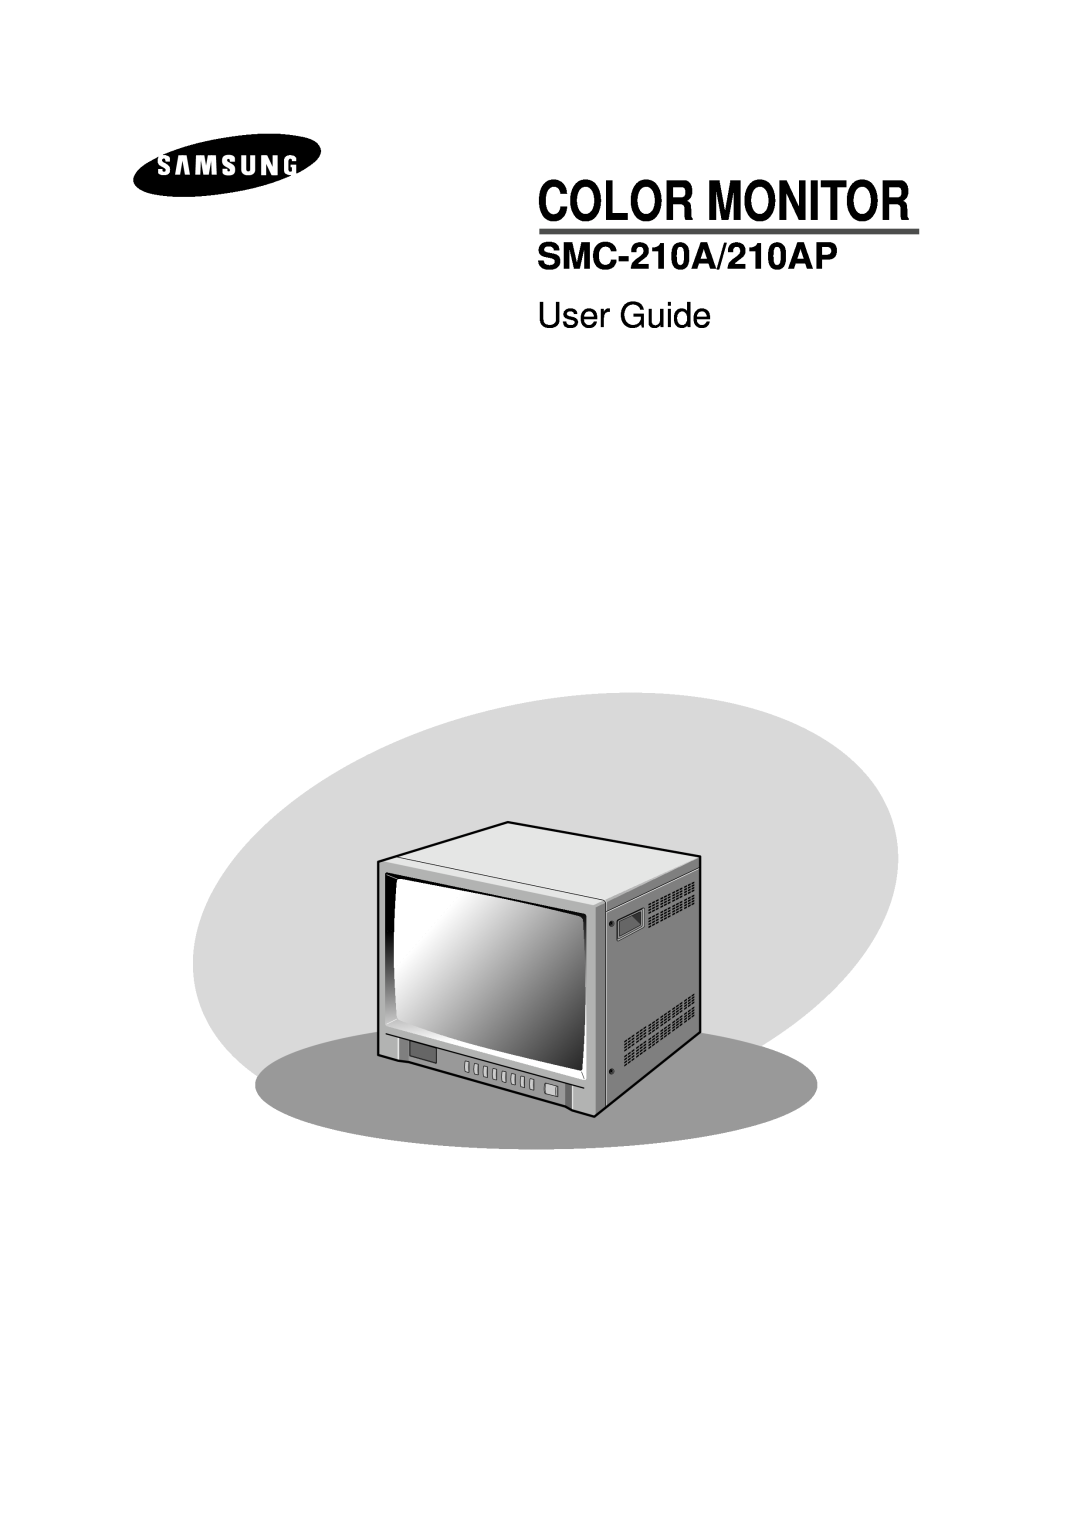 Samsung SMC-210AP manual Color Monitor, SMC-210A/210AP, User Guide 